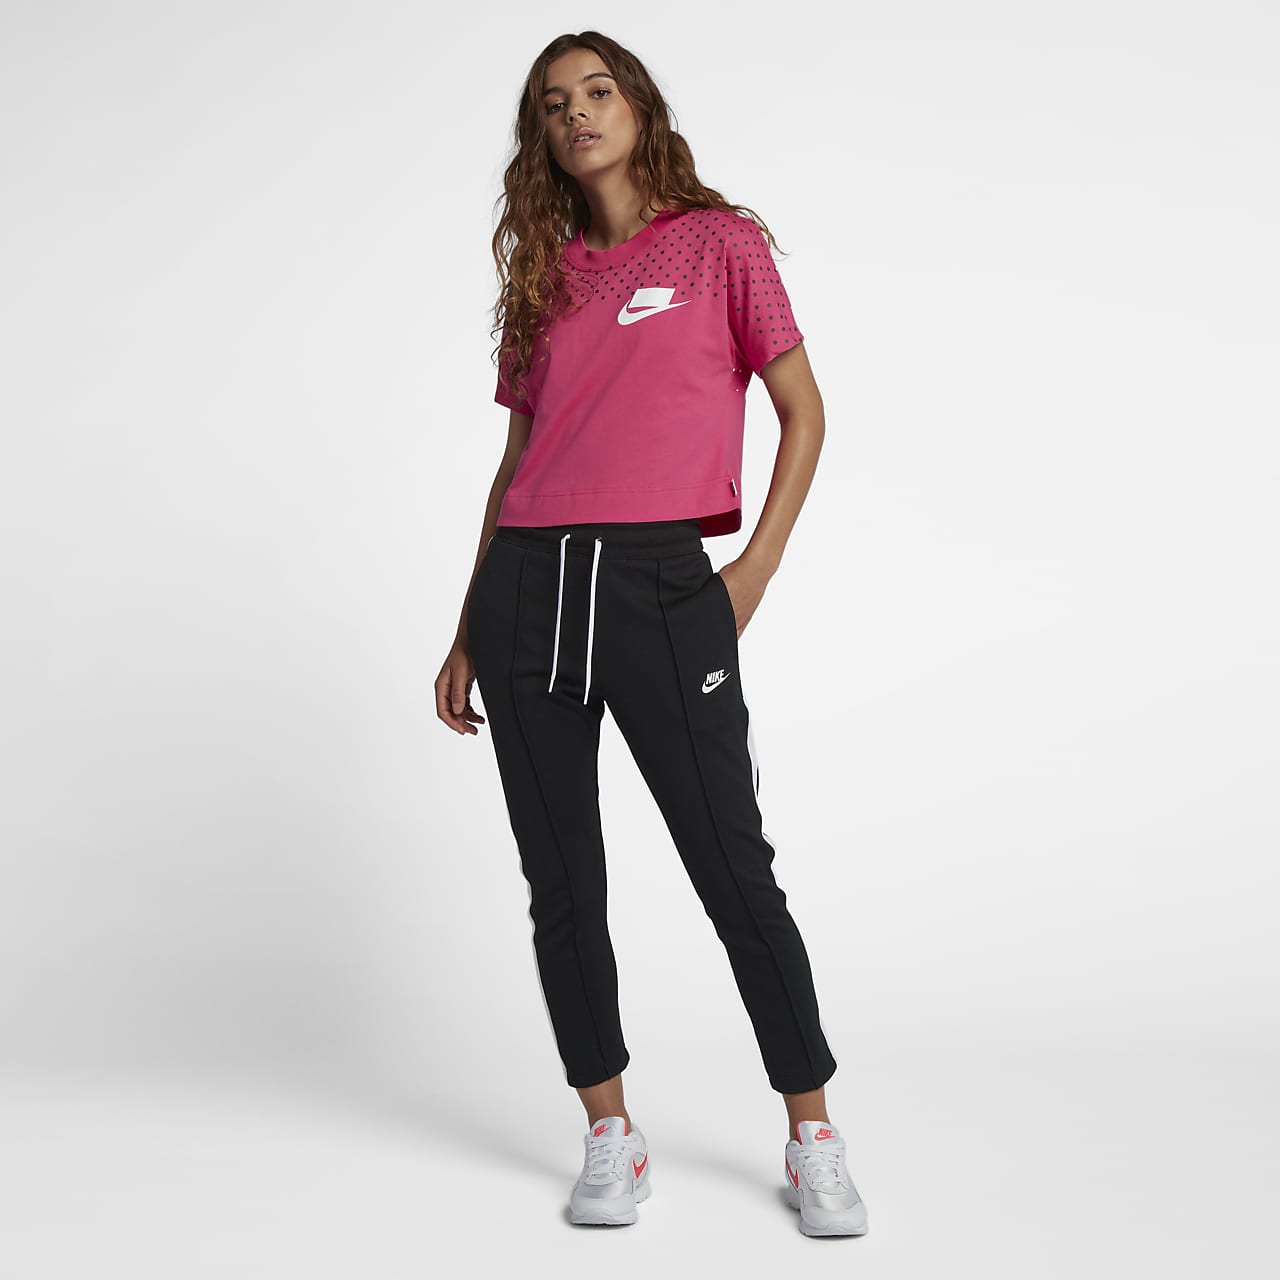 Nike Crop Tops for Women - Poshmark